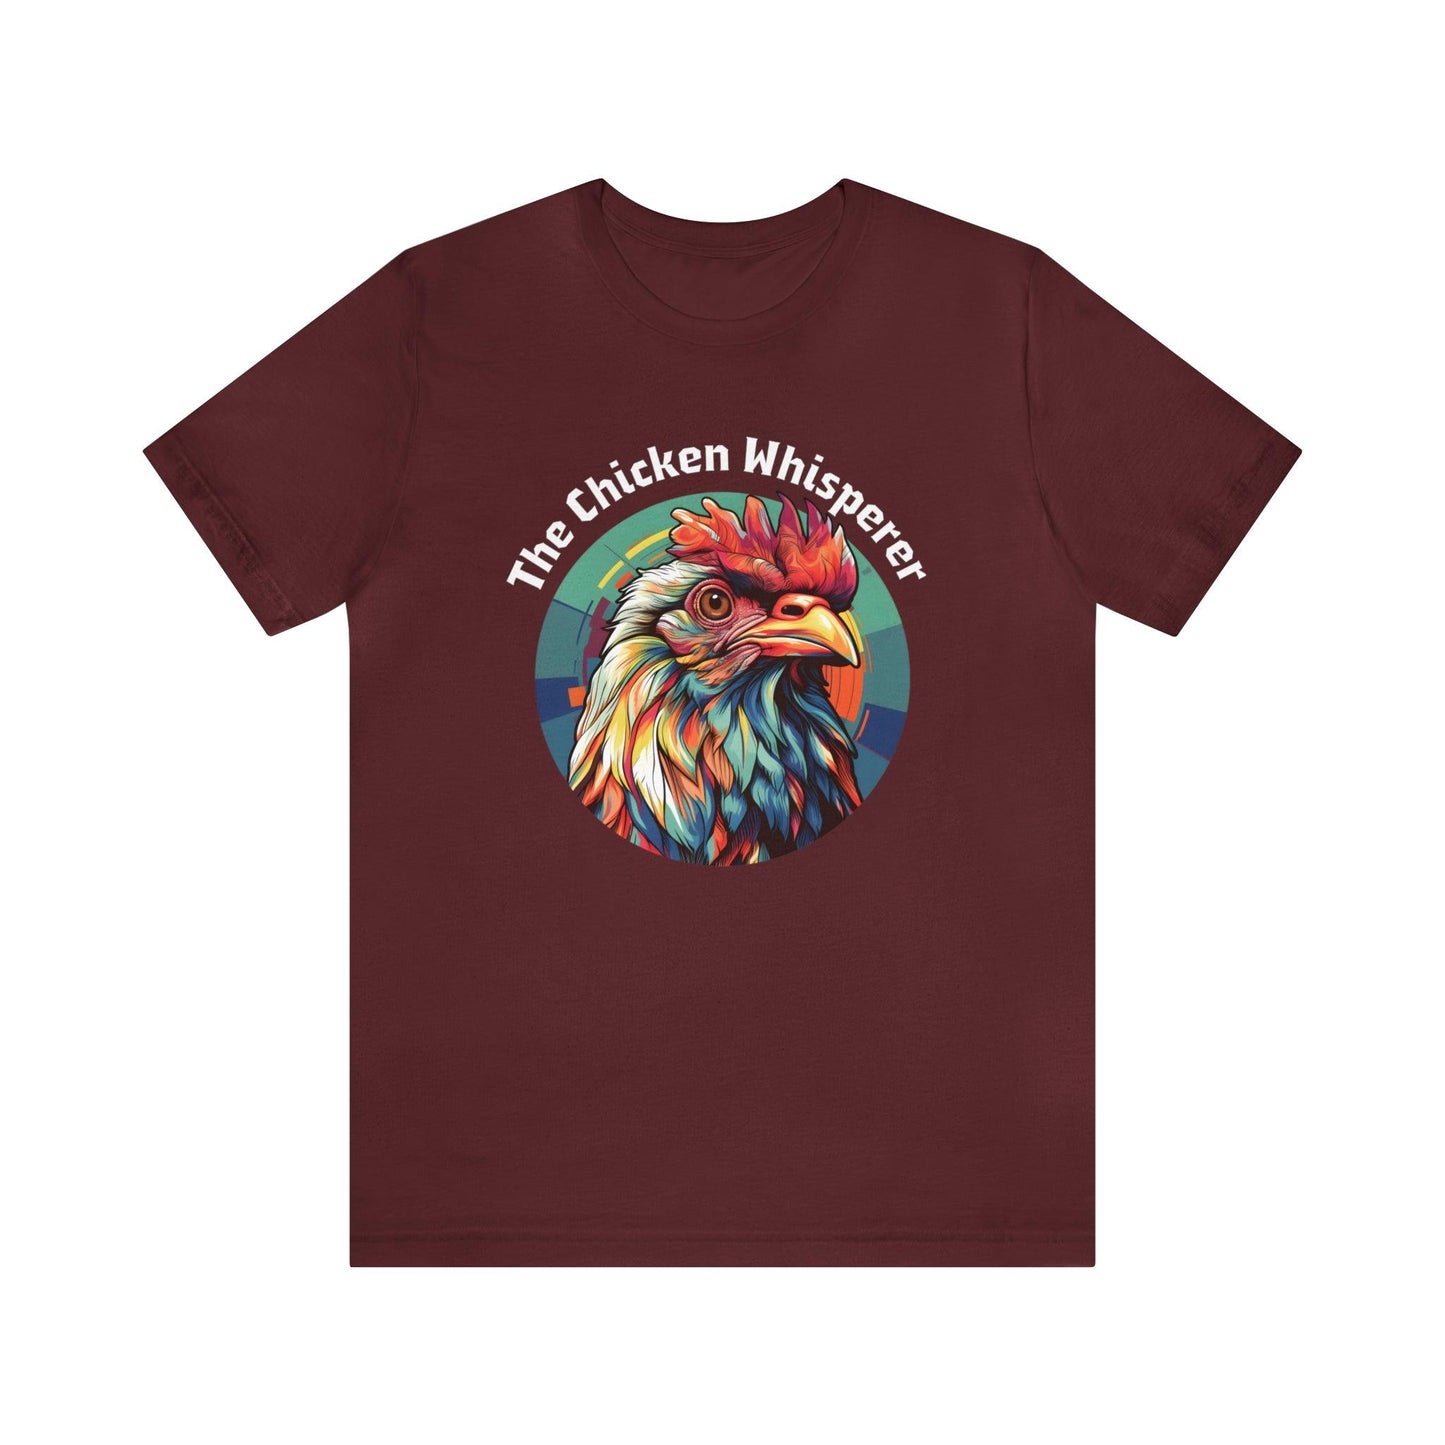 The Chicken Whisperer Shirt - Retro Vintage Chicken Lover Shirt Funny Chicken Shirt farming t-shirt Chicken Shirt Women's Chicken Shirt, Farm Tees Farm Shirt, Chicken Lover Shirt - Giftsmojo